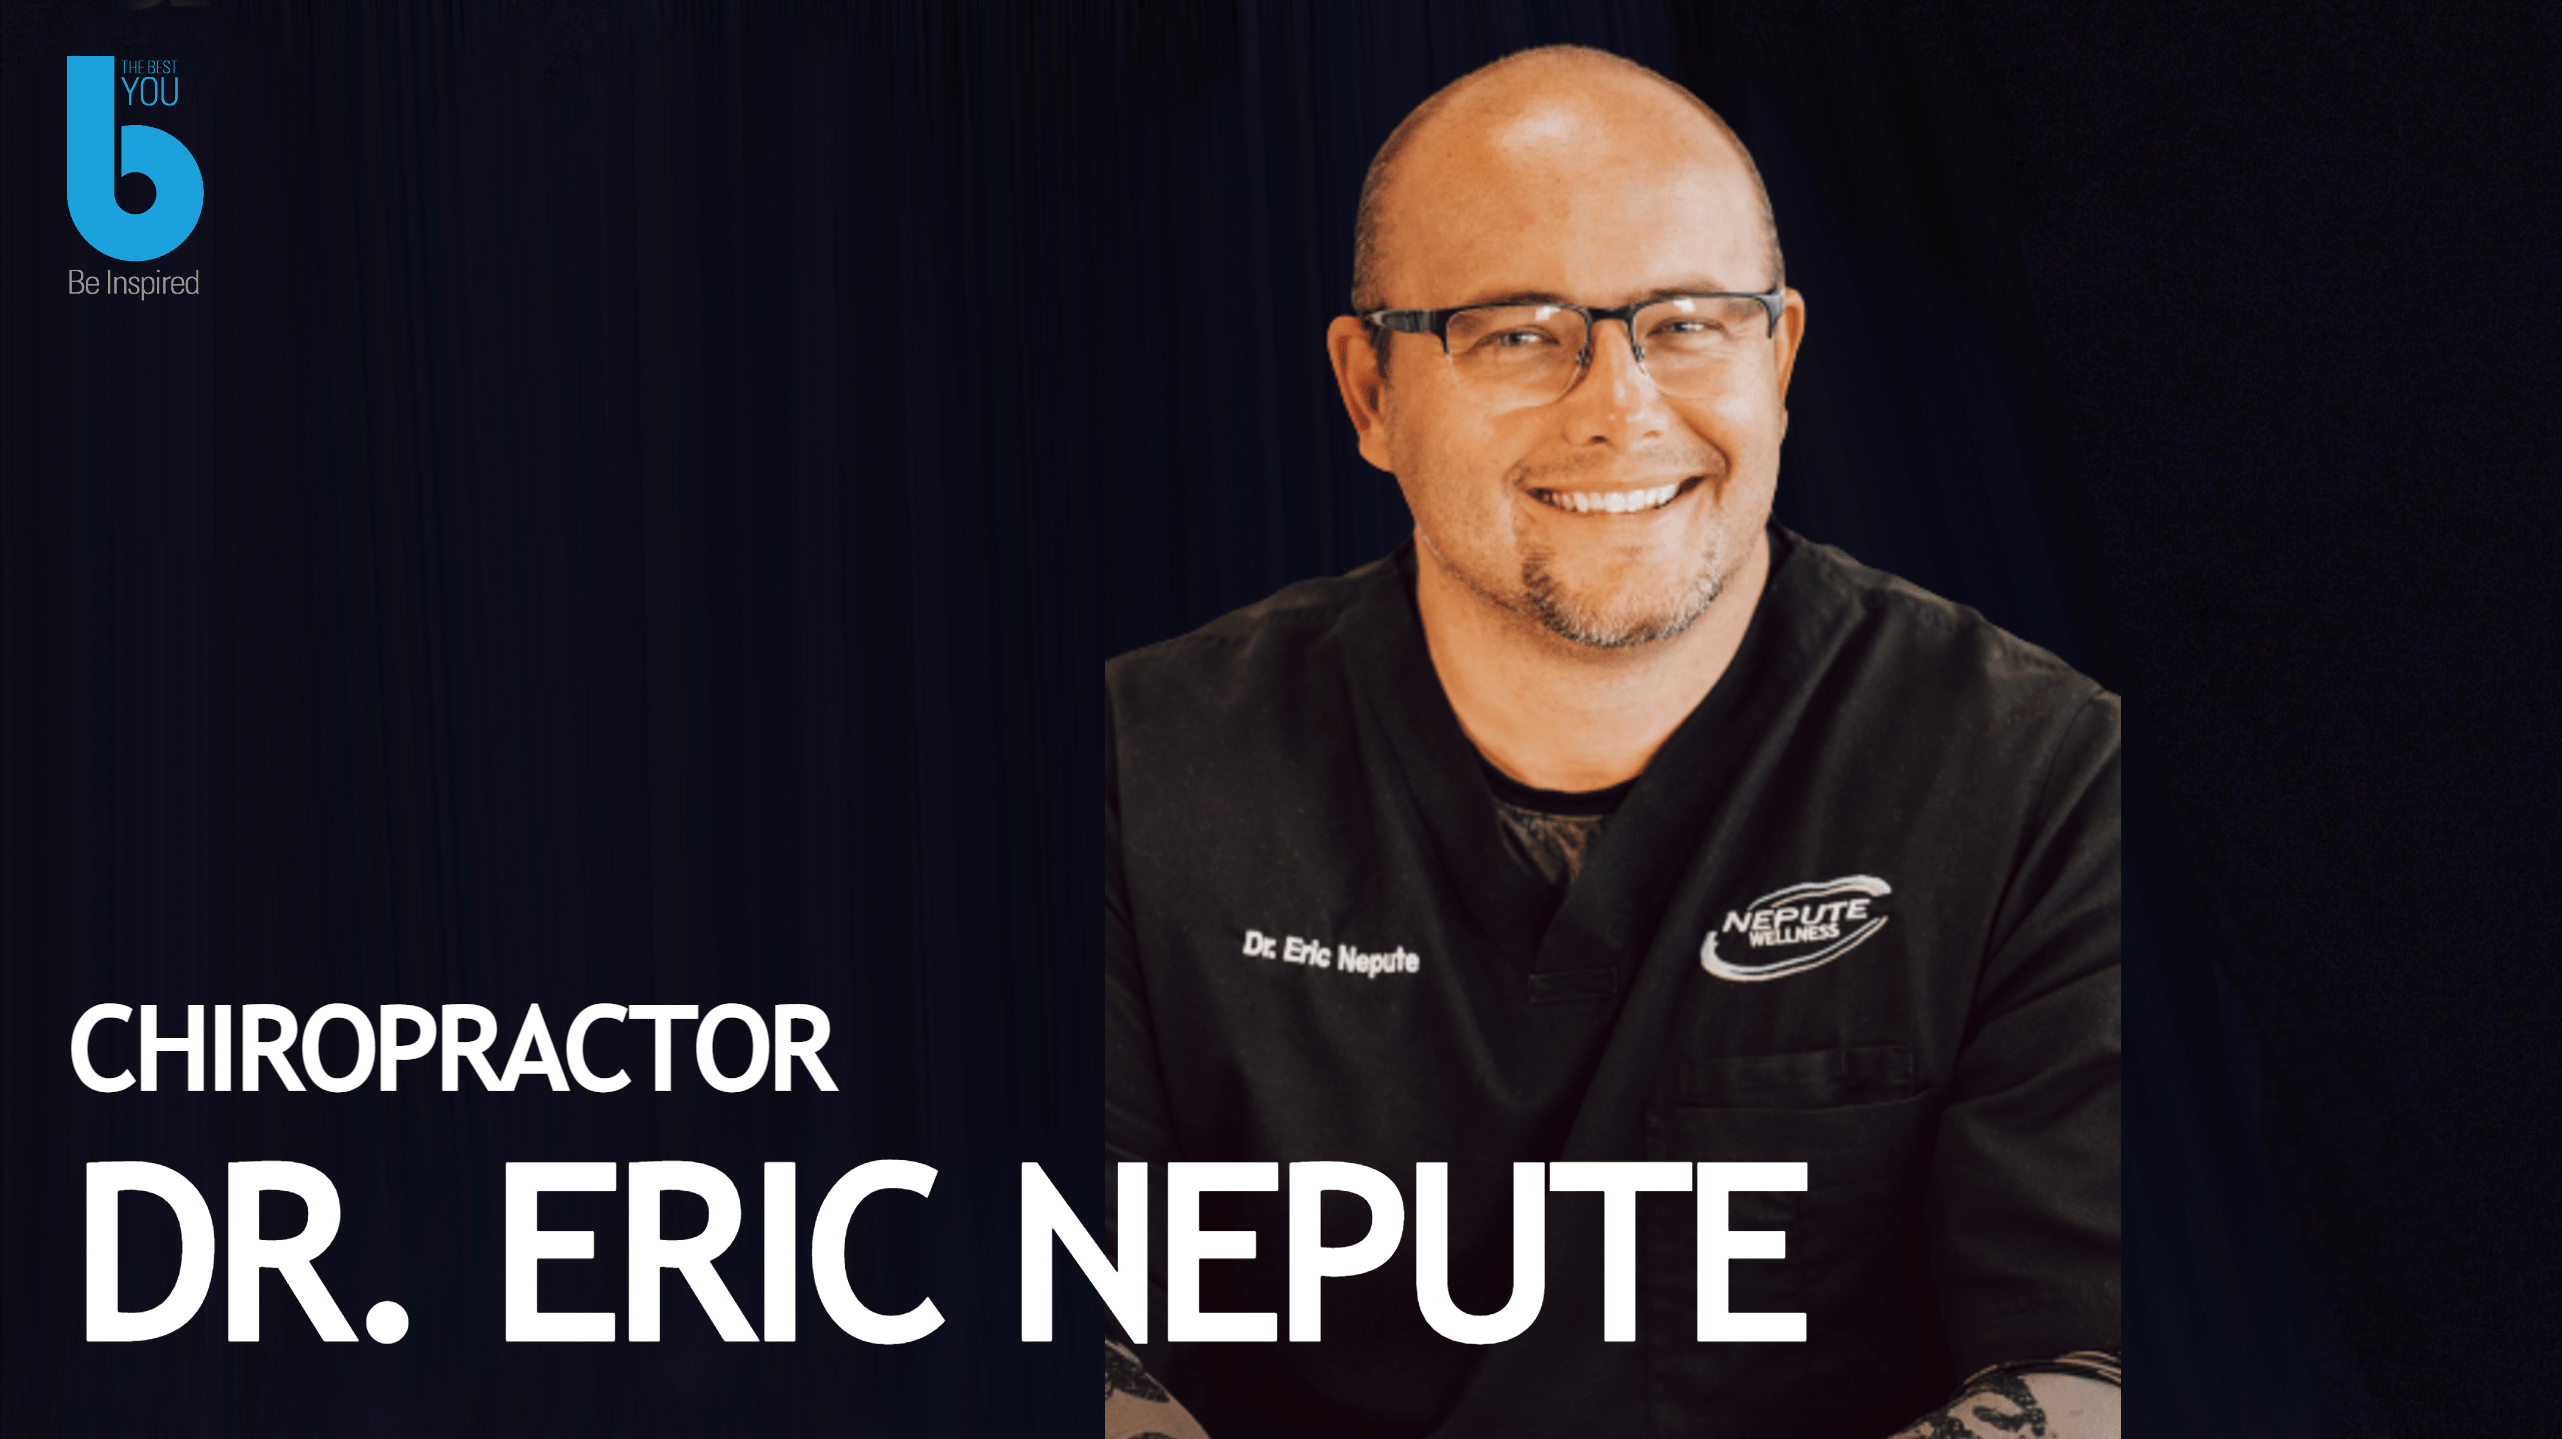 Dr. Eric Nepute